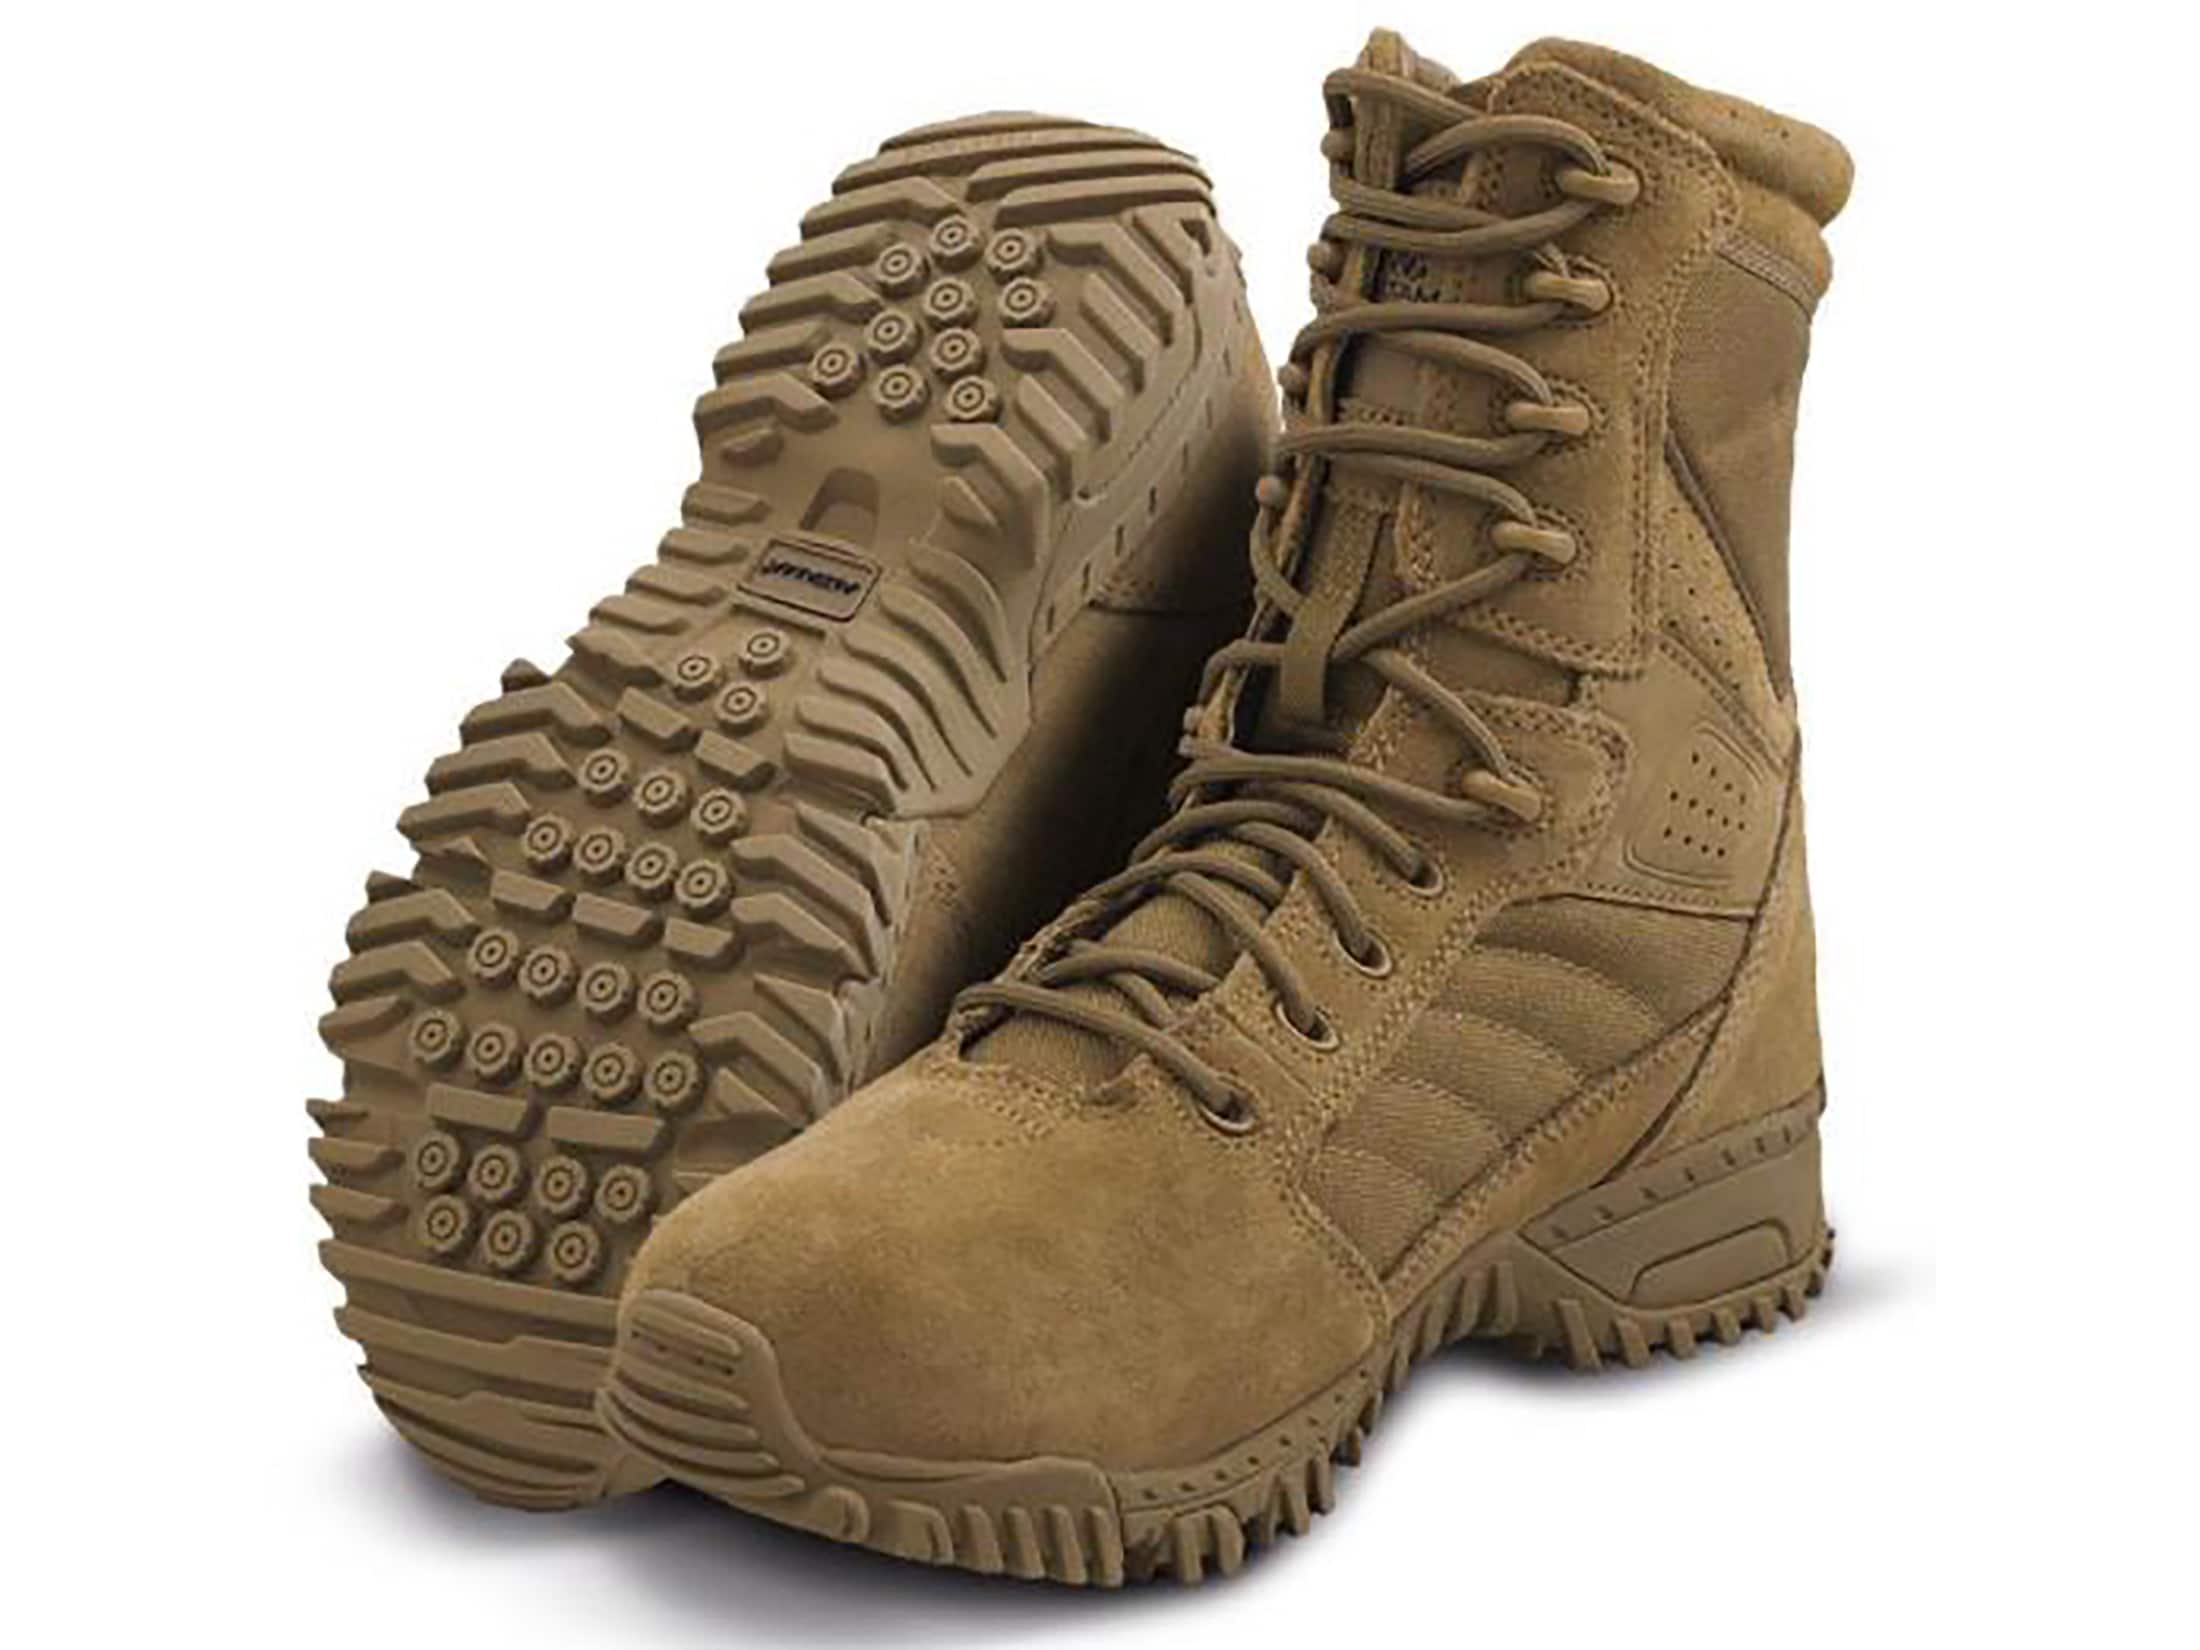 Altama Foxhound SR 8 Tactical Boots Leather/Cordura Coyote Men's 11 D